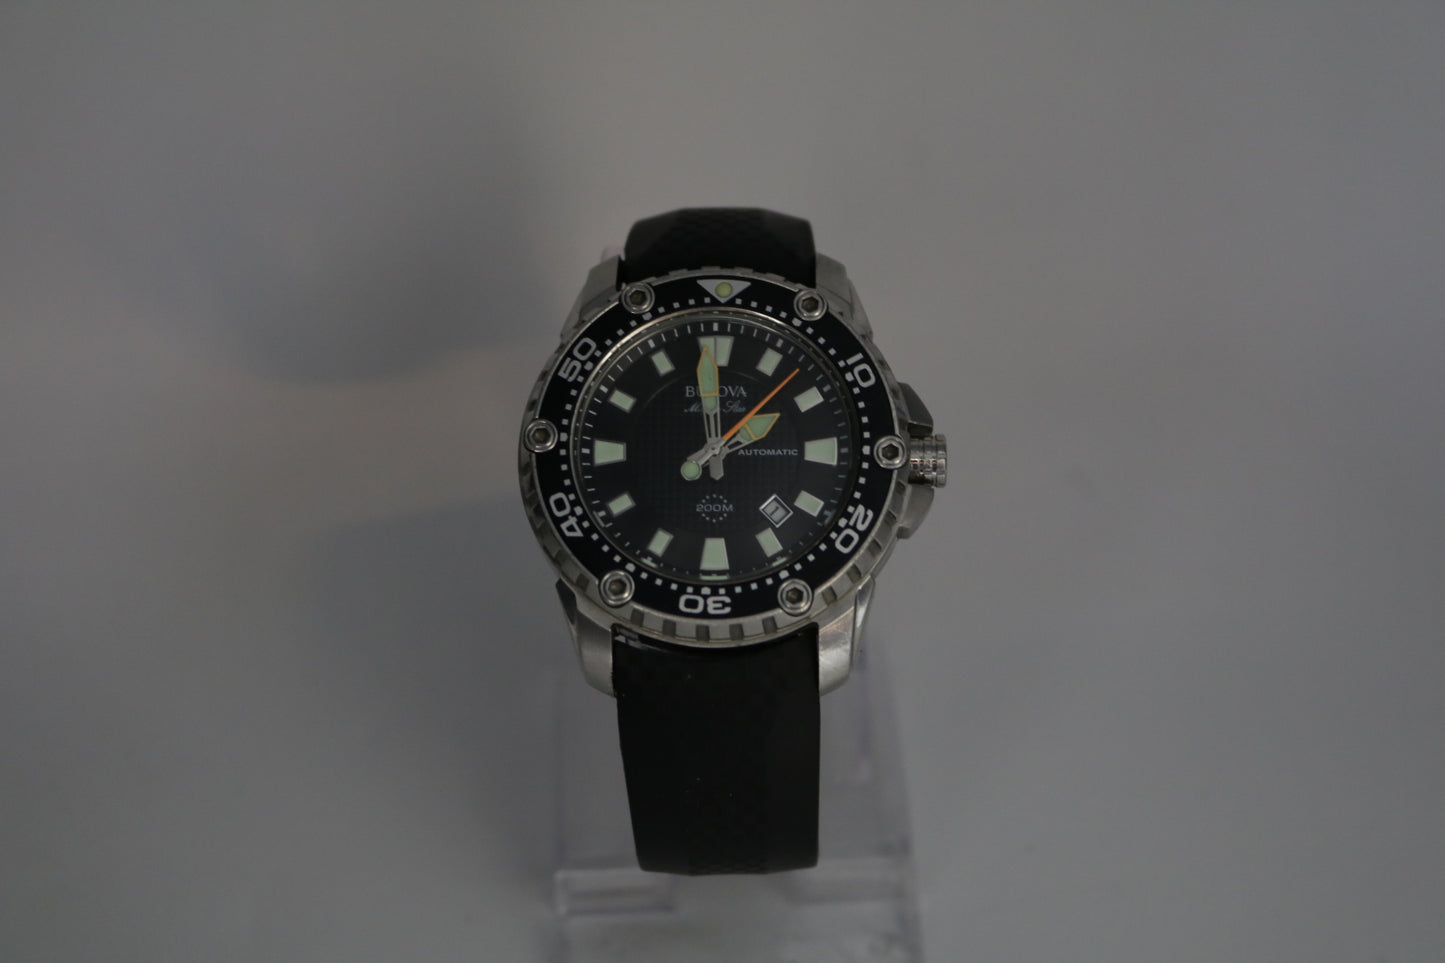 Bulova Marine Star 98b209 Automatic Watch